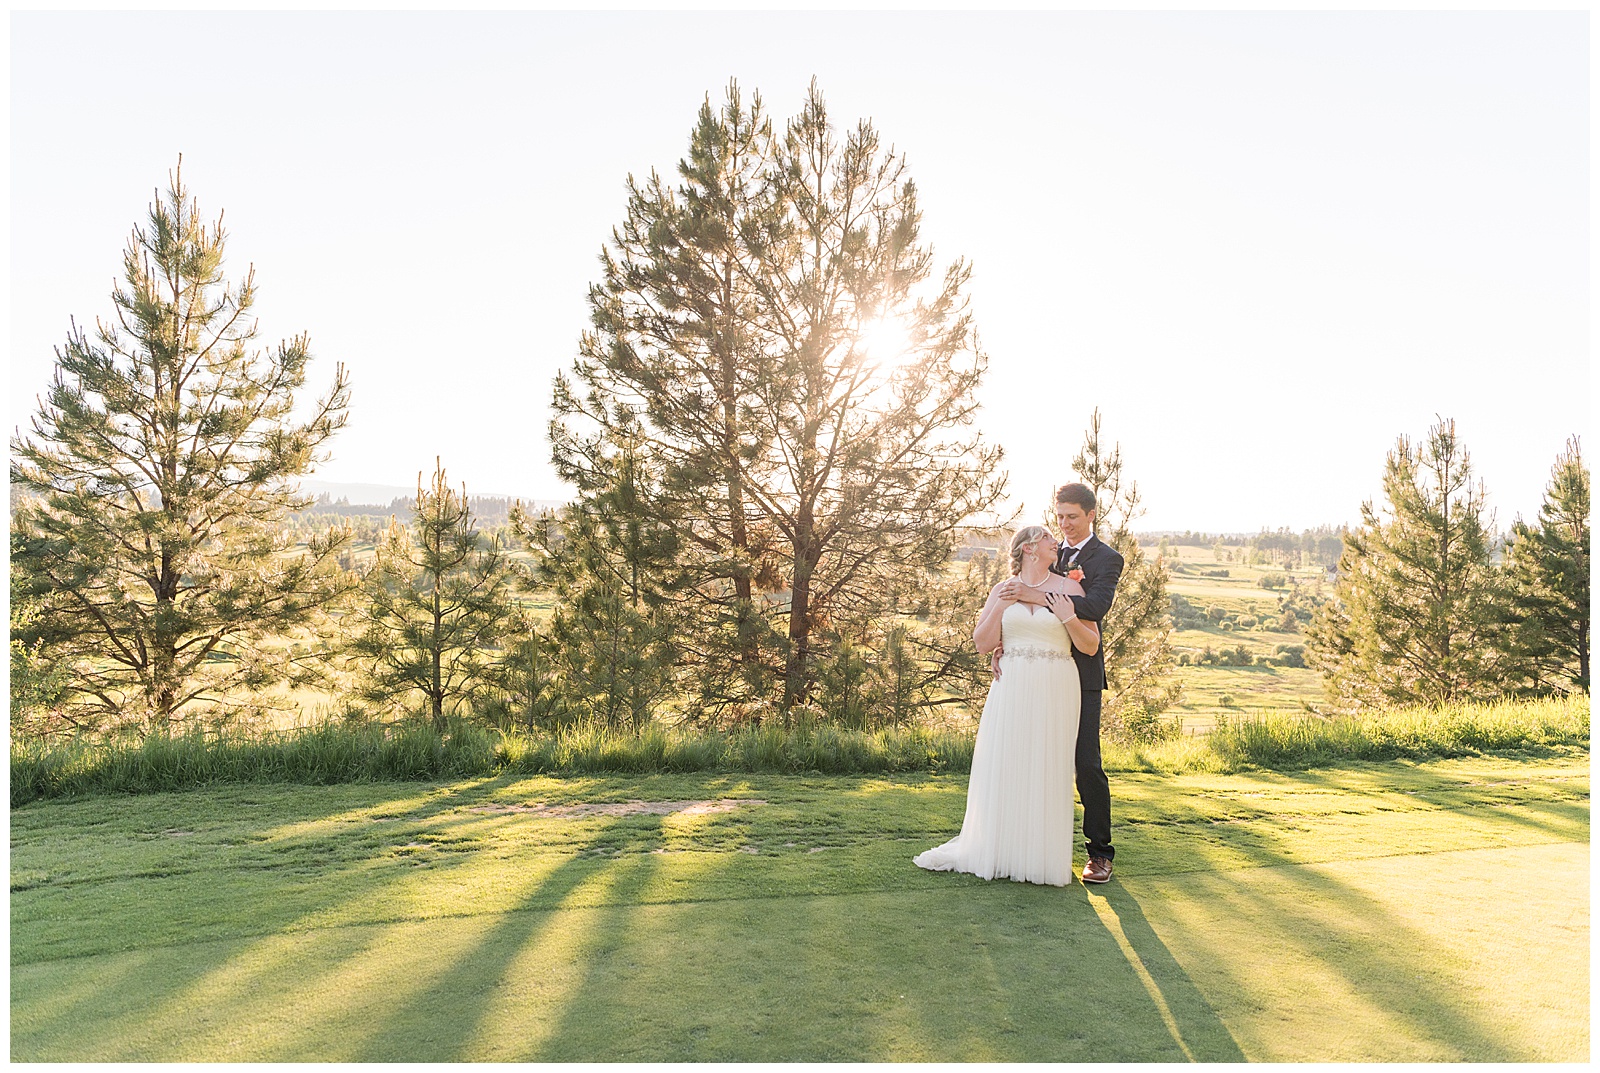 Sunset wedding portrait at Jug Mountain Ranch